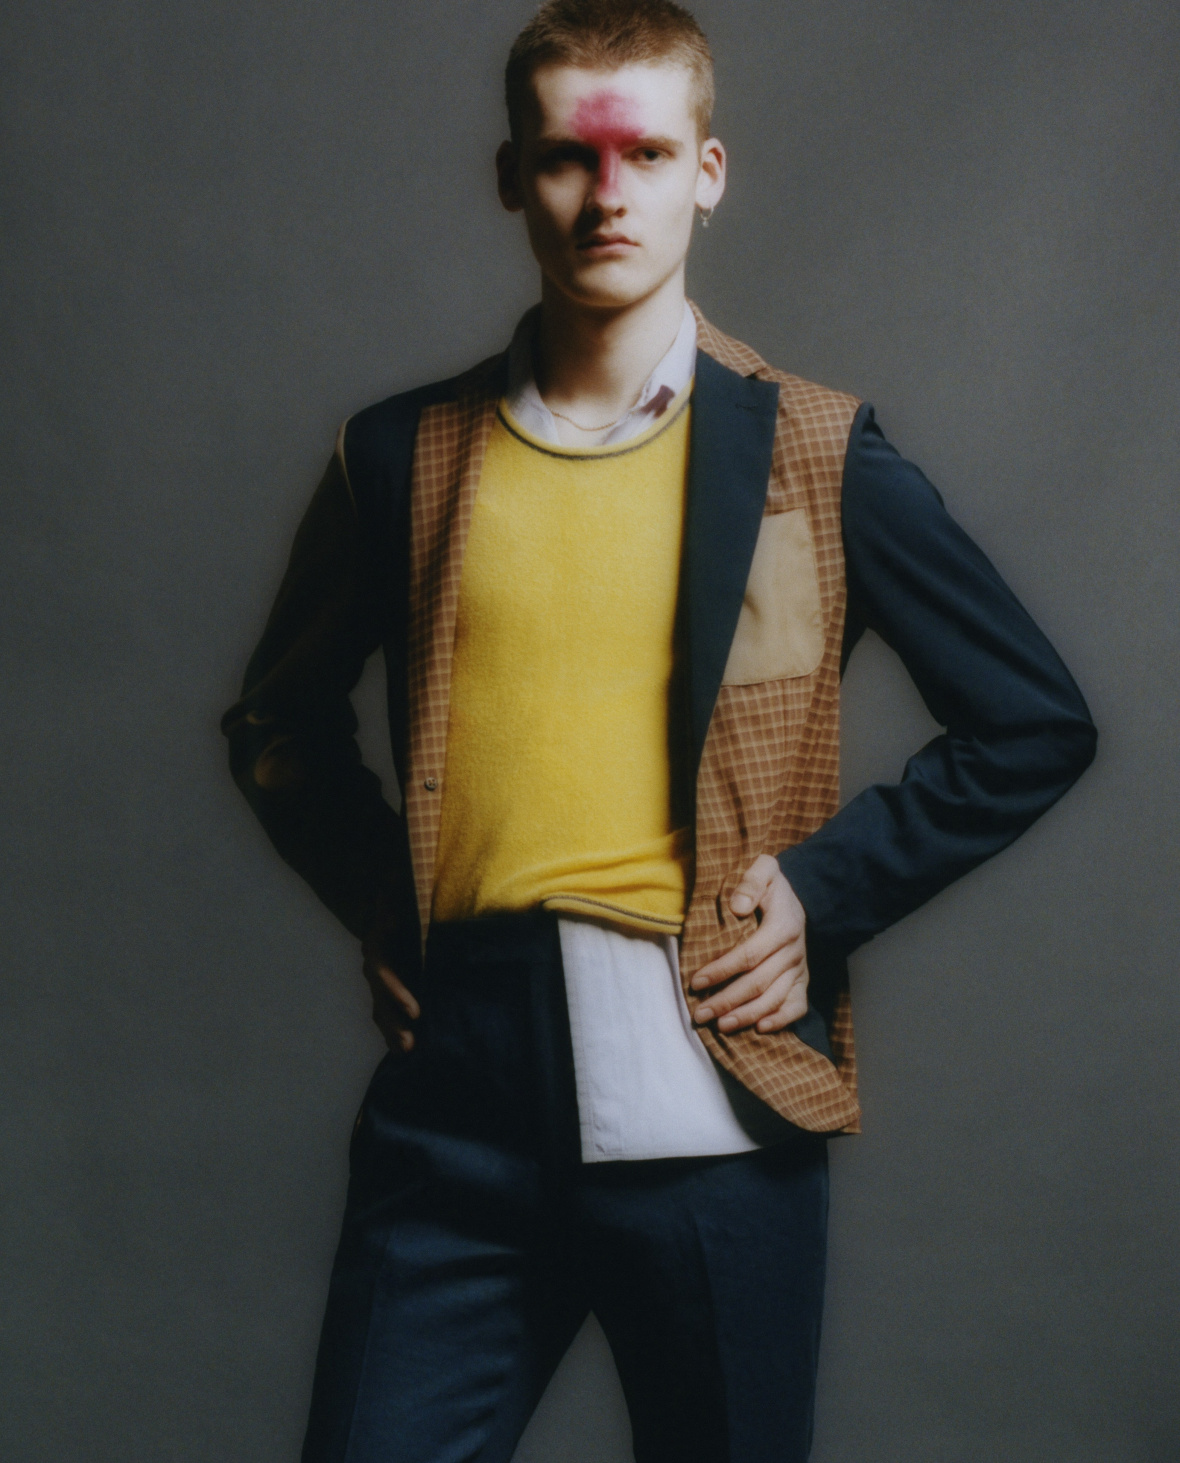 Jacket — Barena Venezia, Shirt — Prada, Vest — Stylist's own, Trousers — Gieves and Hawkes